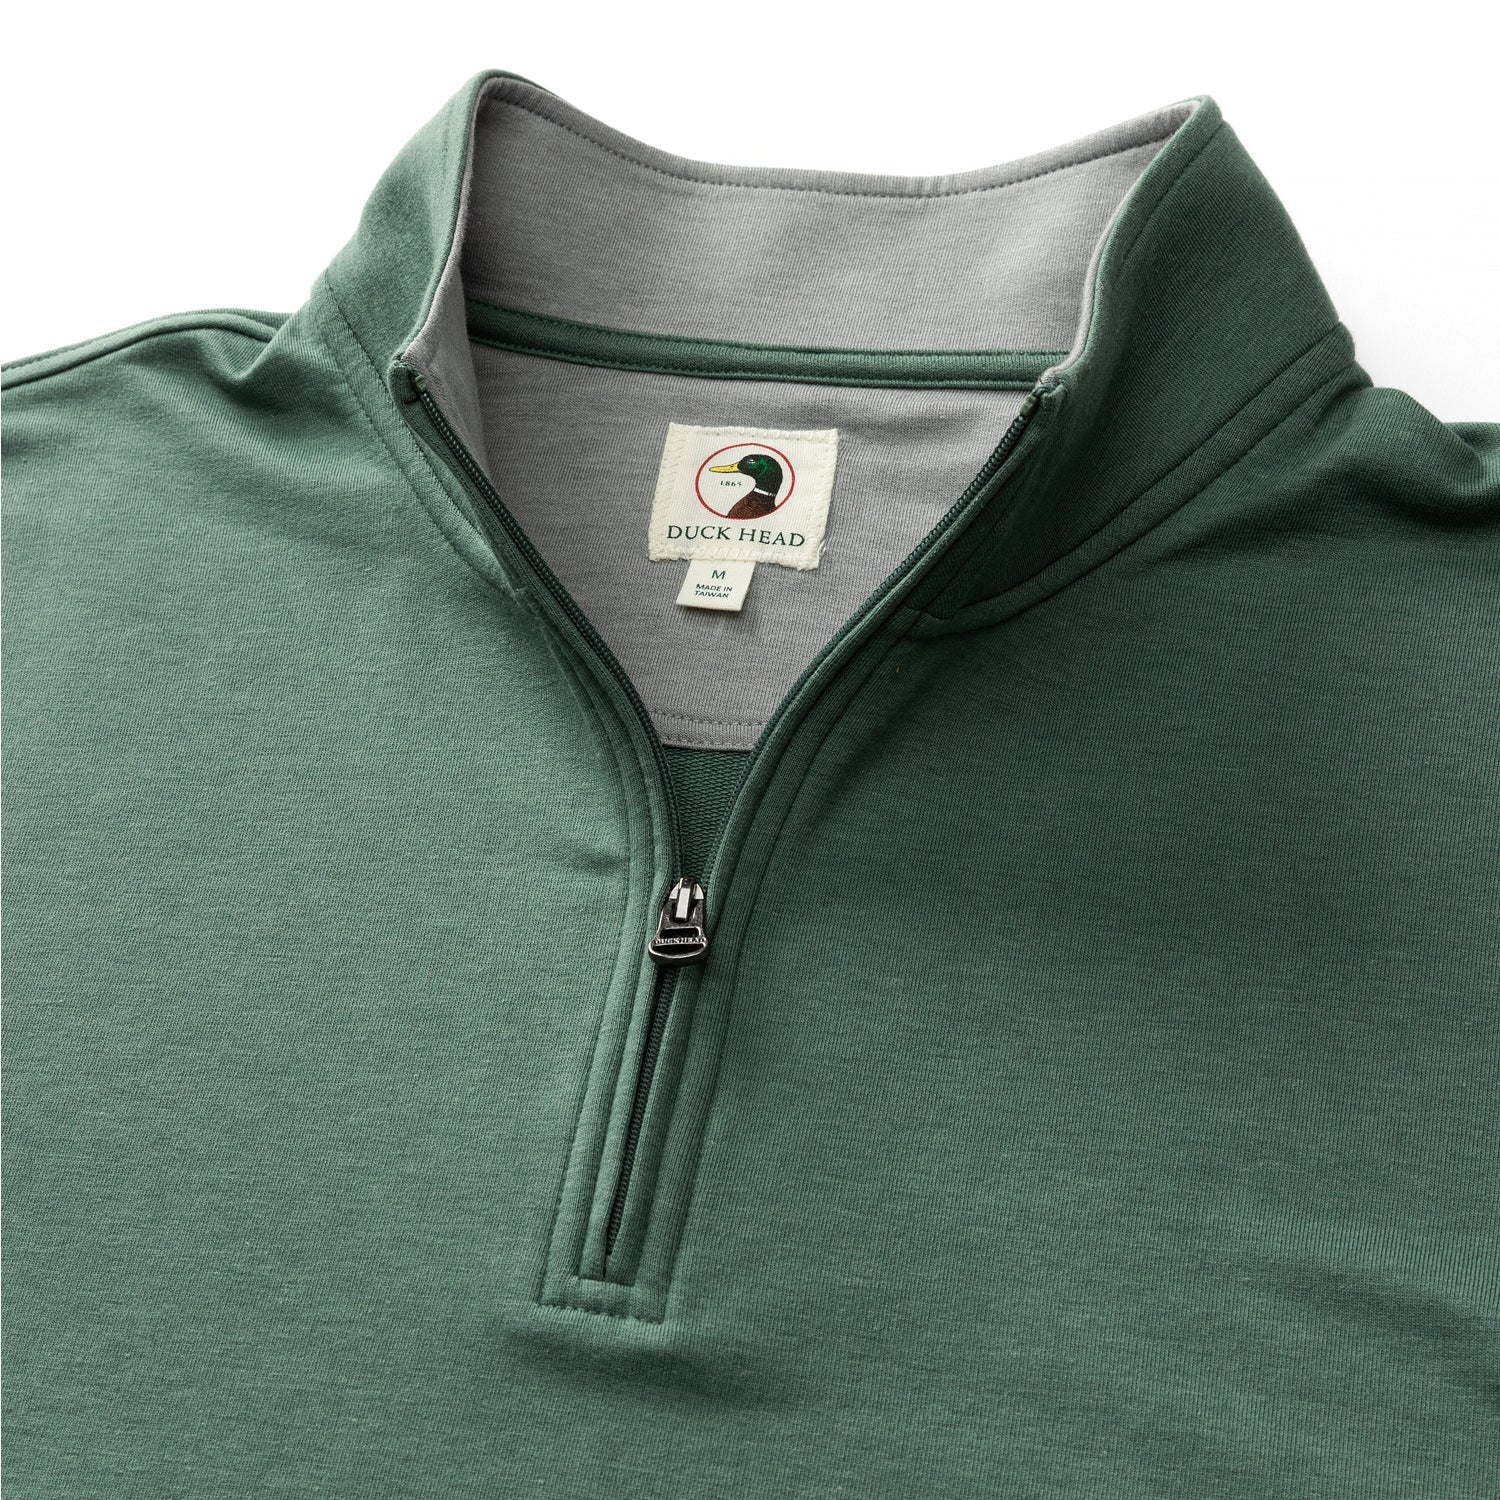 Dunmore 1/4 Zip Pullover | Duck Head - Apparel Shirt